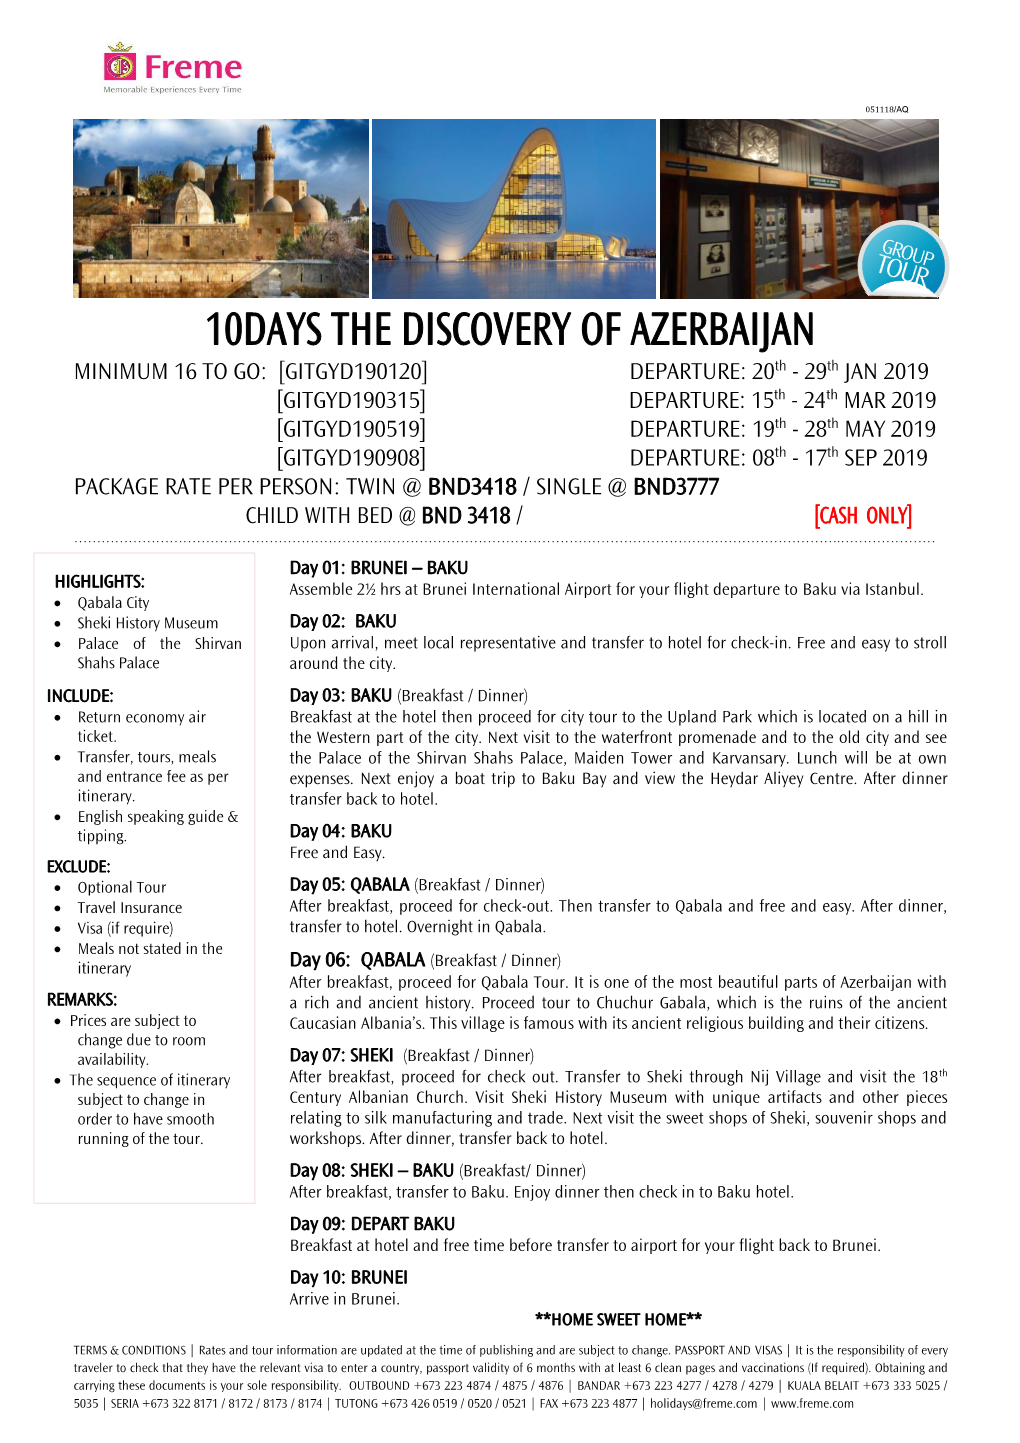 Gitgyd190120 10D Discovery of Azerbaijan